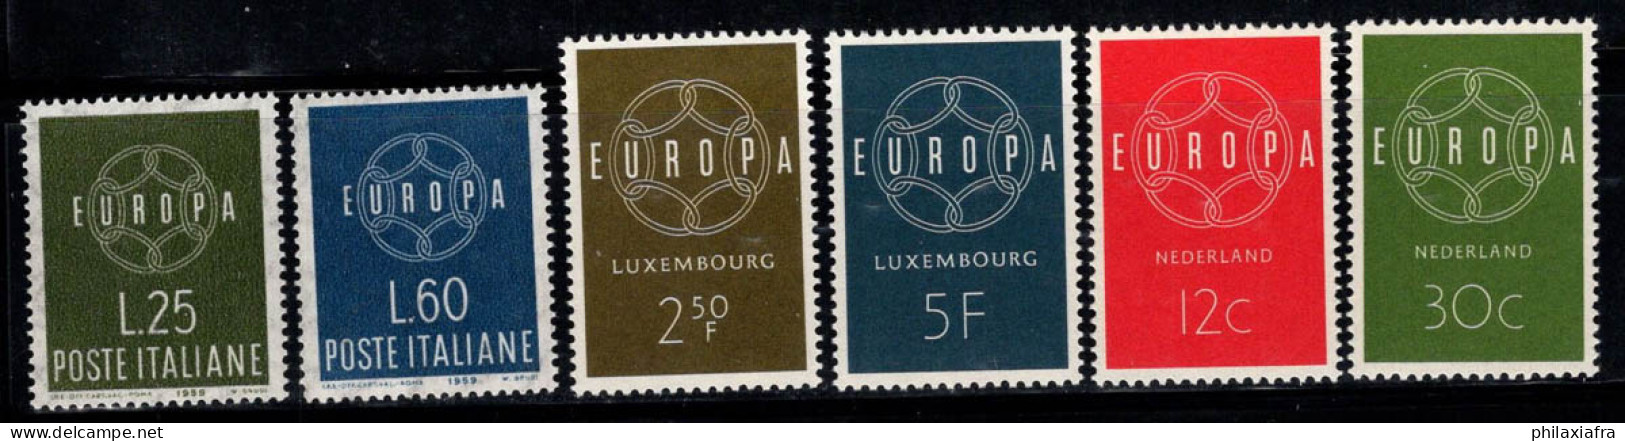 Europe CEPT 1959 Neuf ** 100% Luxembourg, Italie - 1959